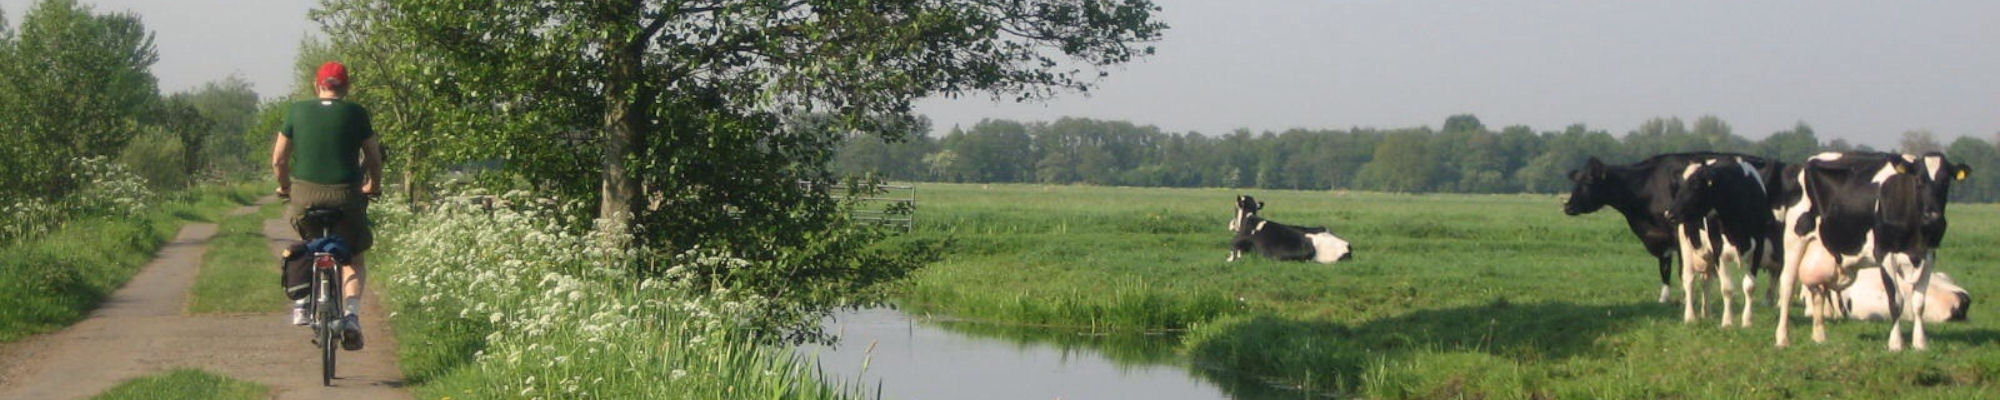 images/slides/dutch-wildlife-meadows.jpg